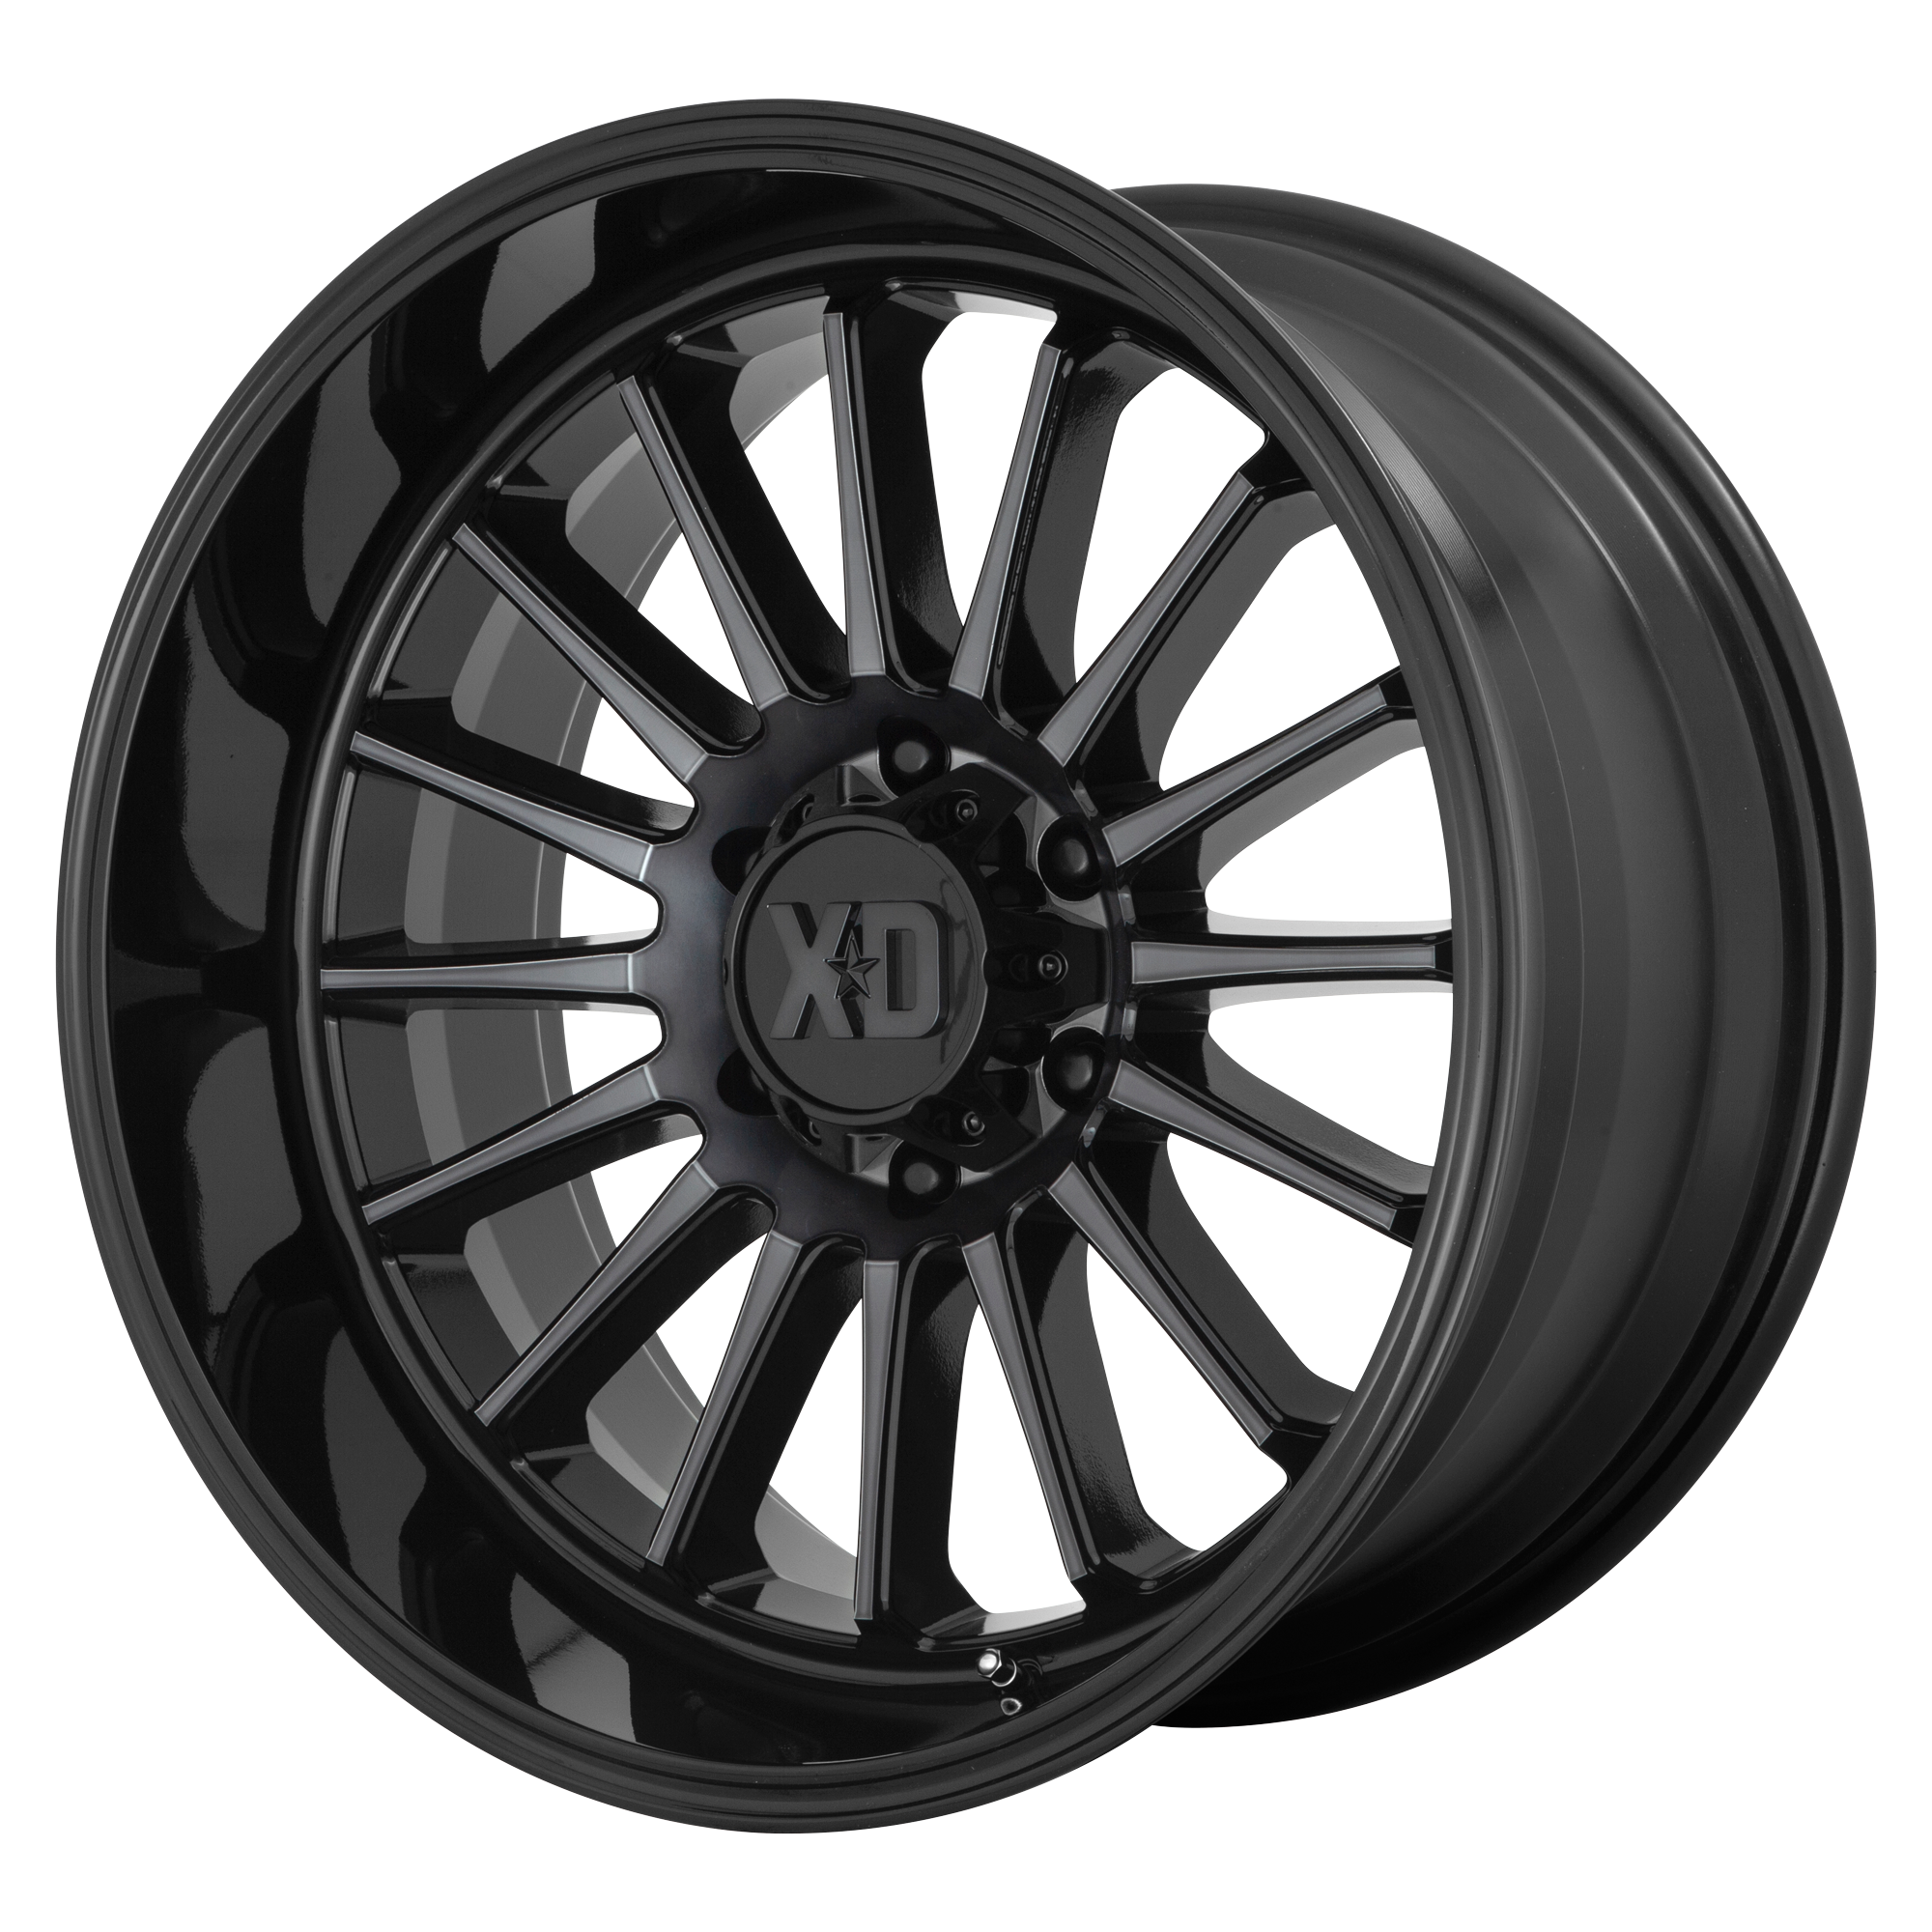 XD 22"x10" Non-Chrome Gloss Black With Gray Tint Custom Wheel ARSWCWXD85722068418N